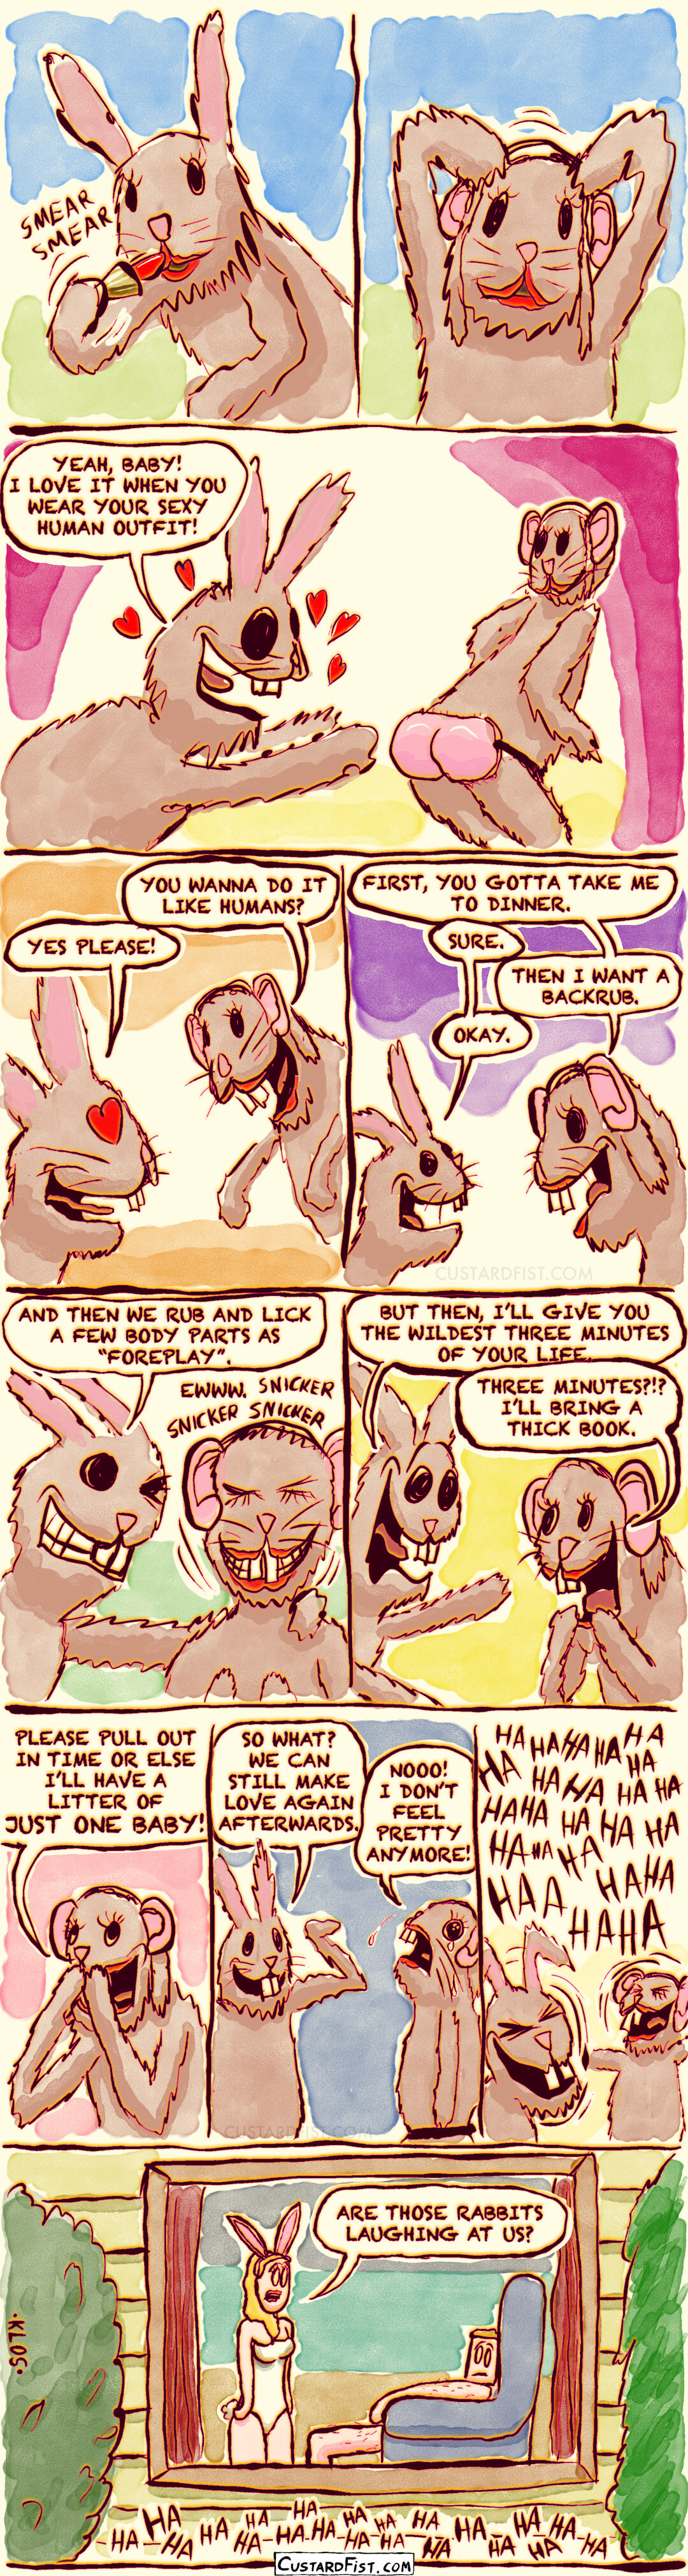 Rabbits dress up as sexy humans and make fun of us.